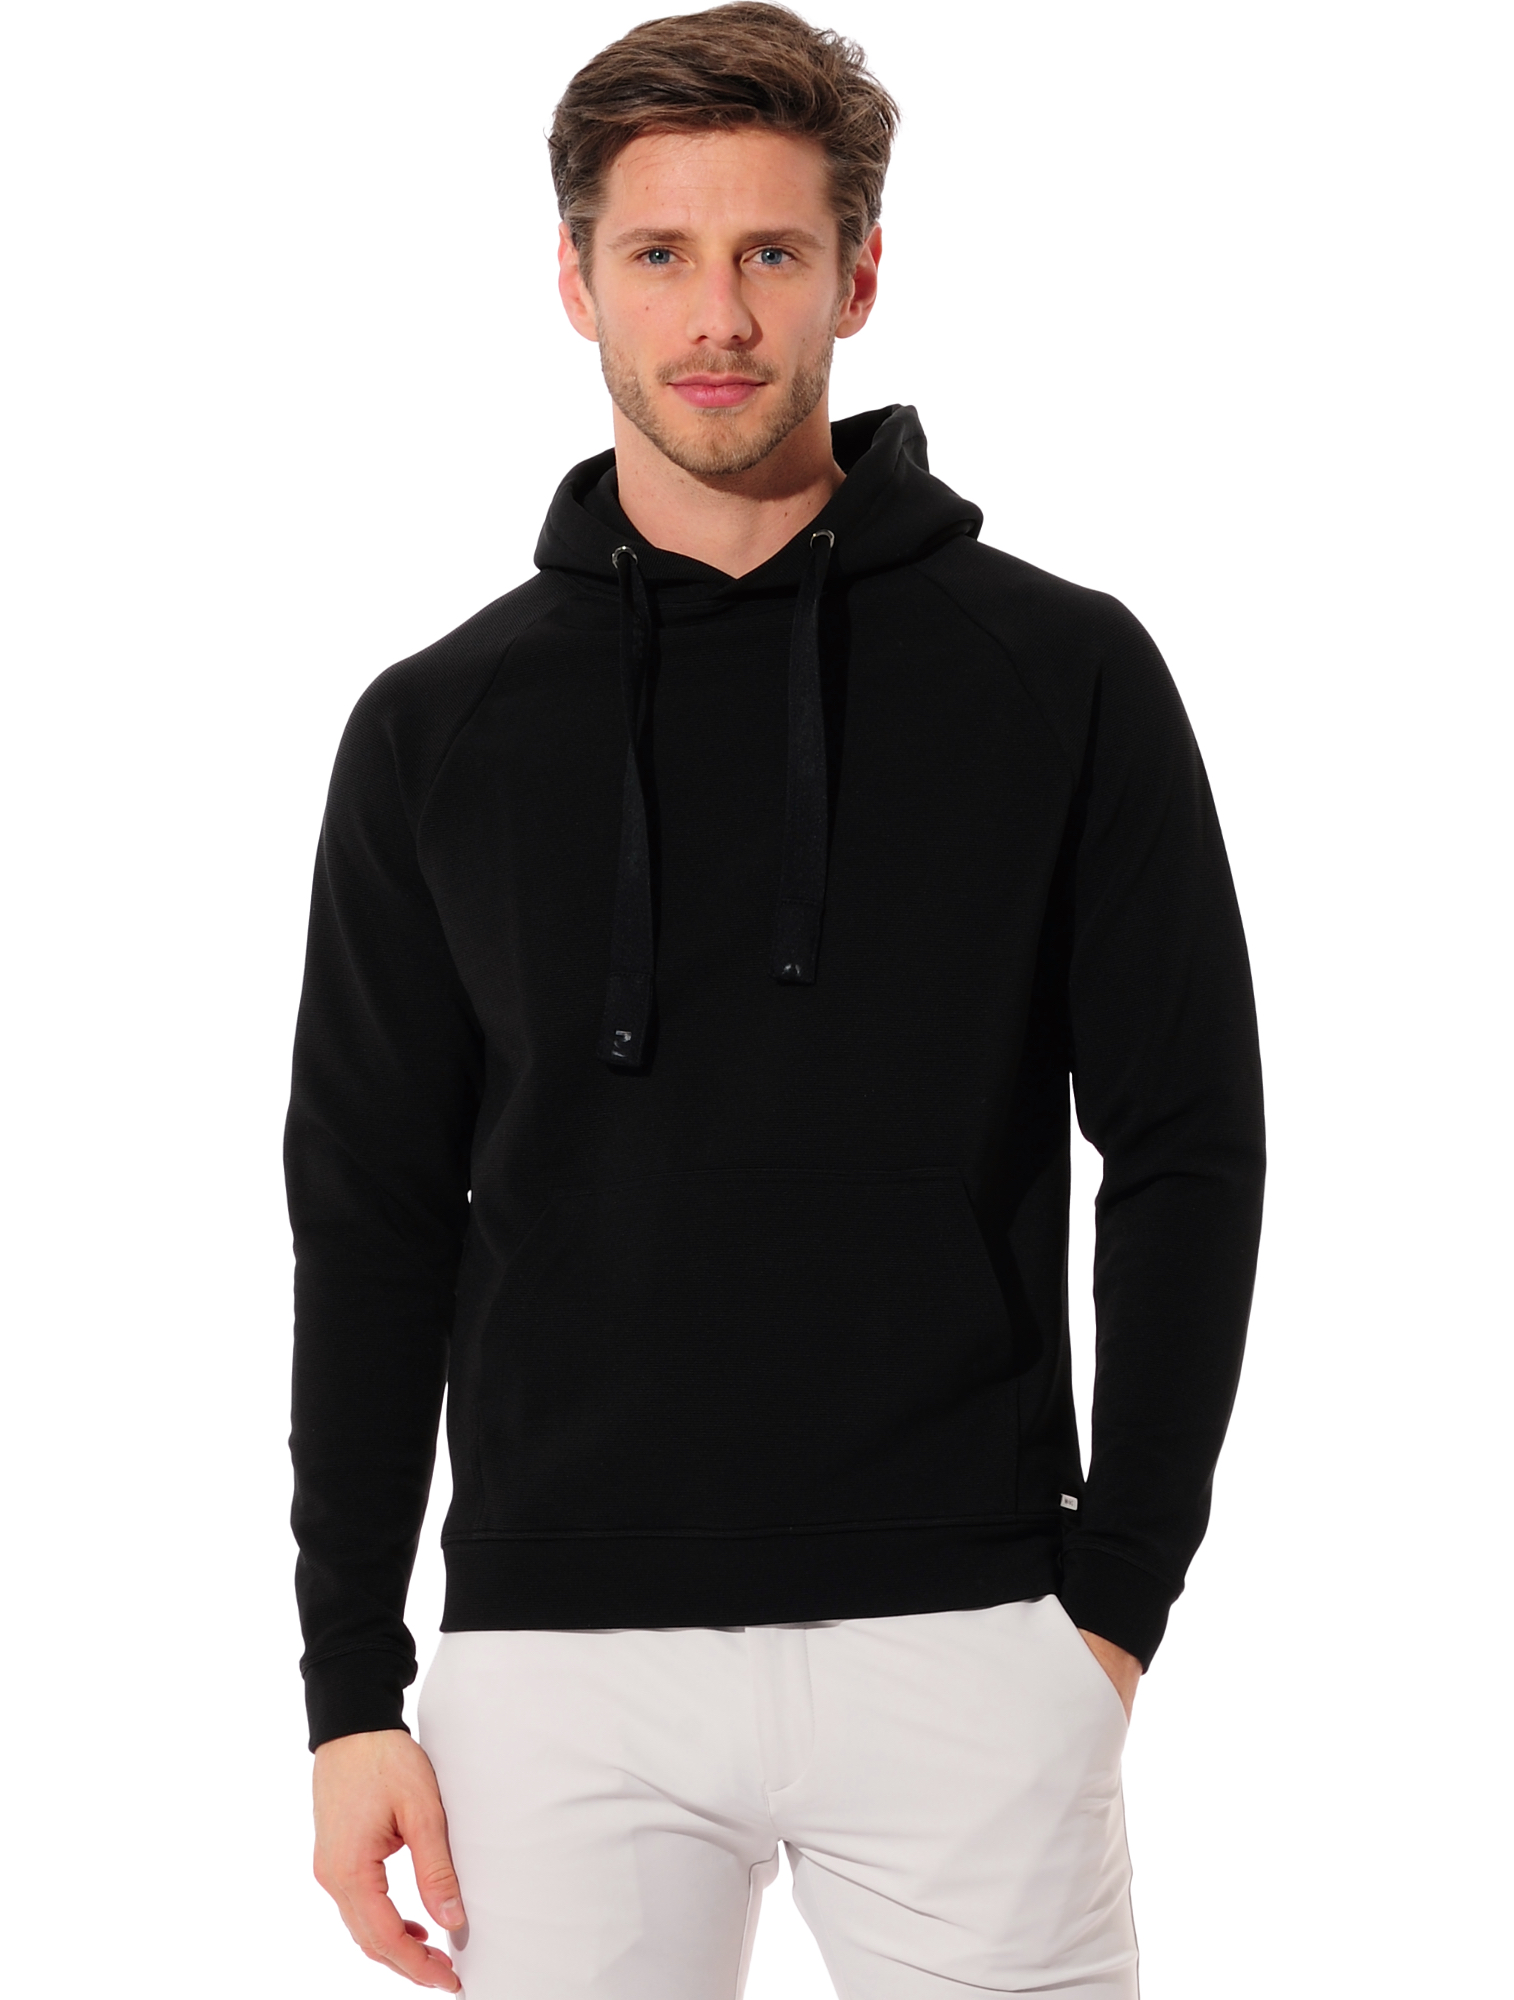 Stelvio hoodie black 